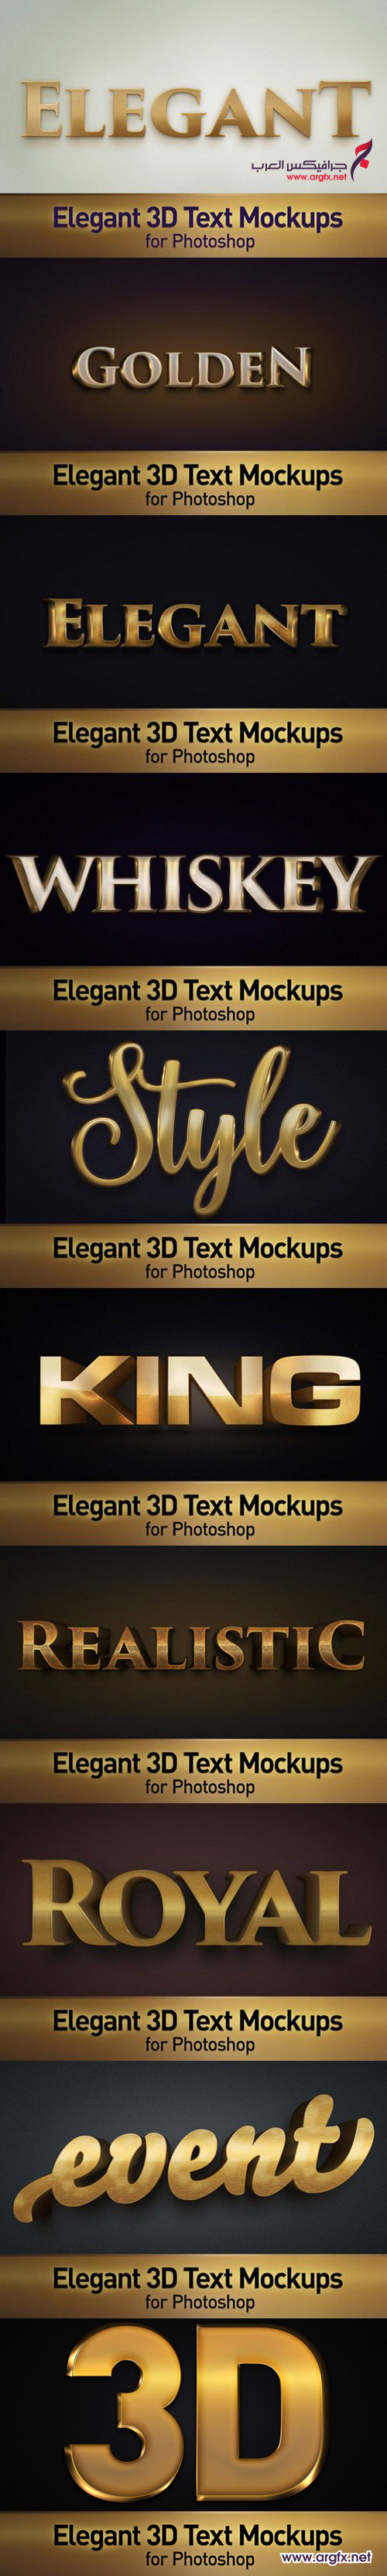  CM - Elegant 3D Text Photoshop Mockups 981708